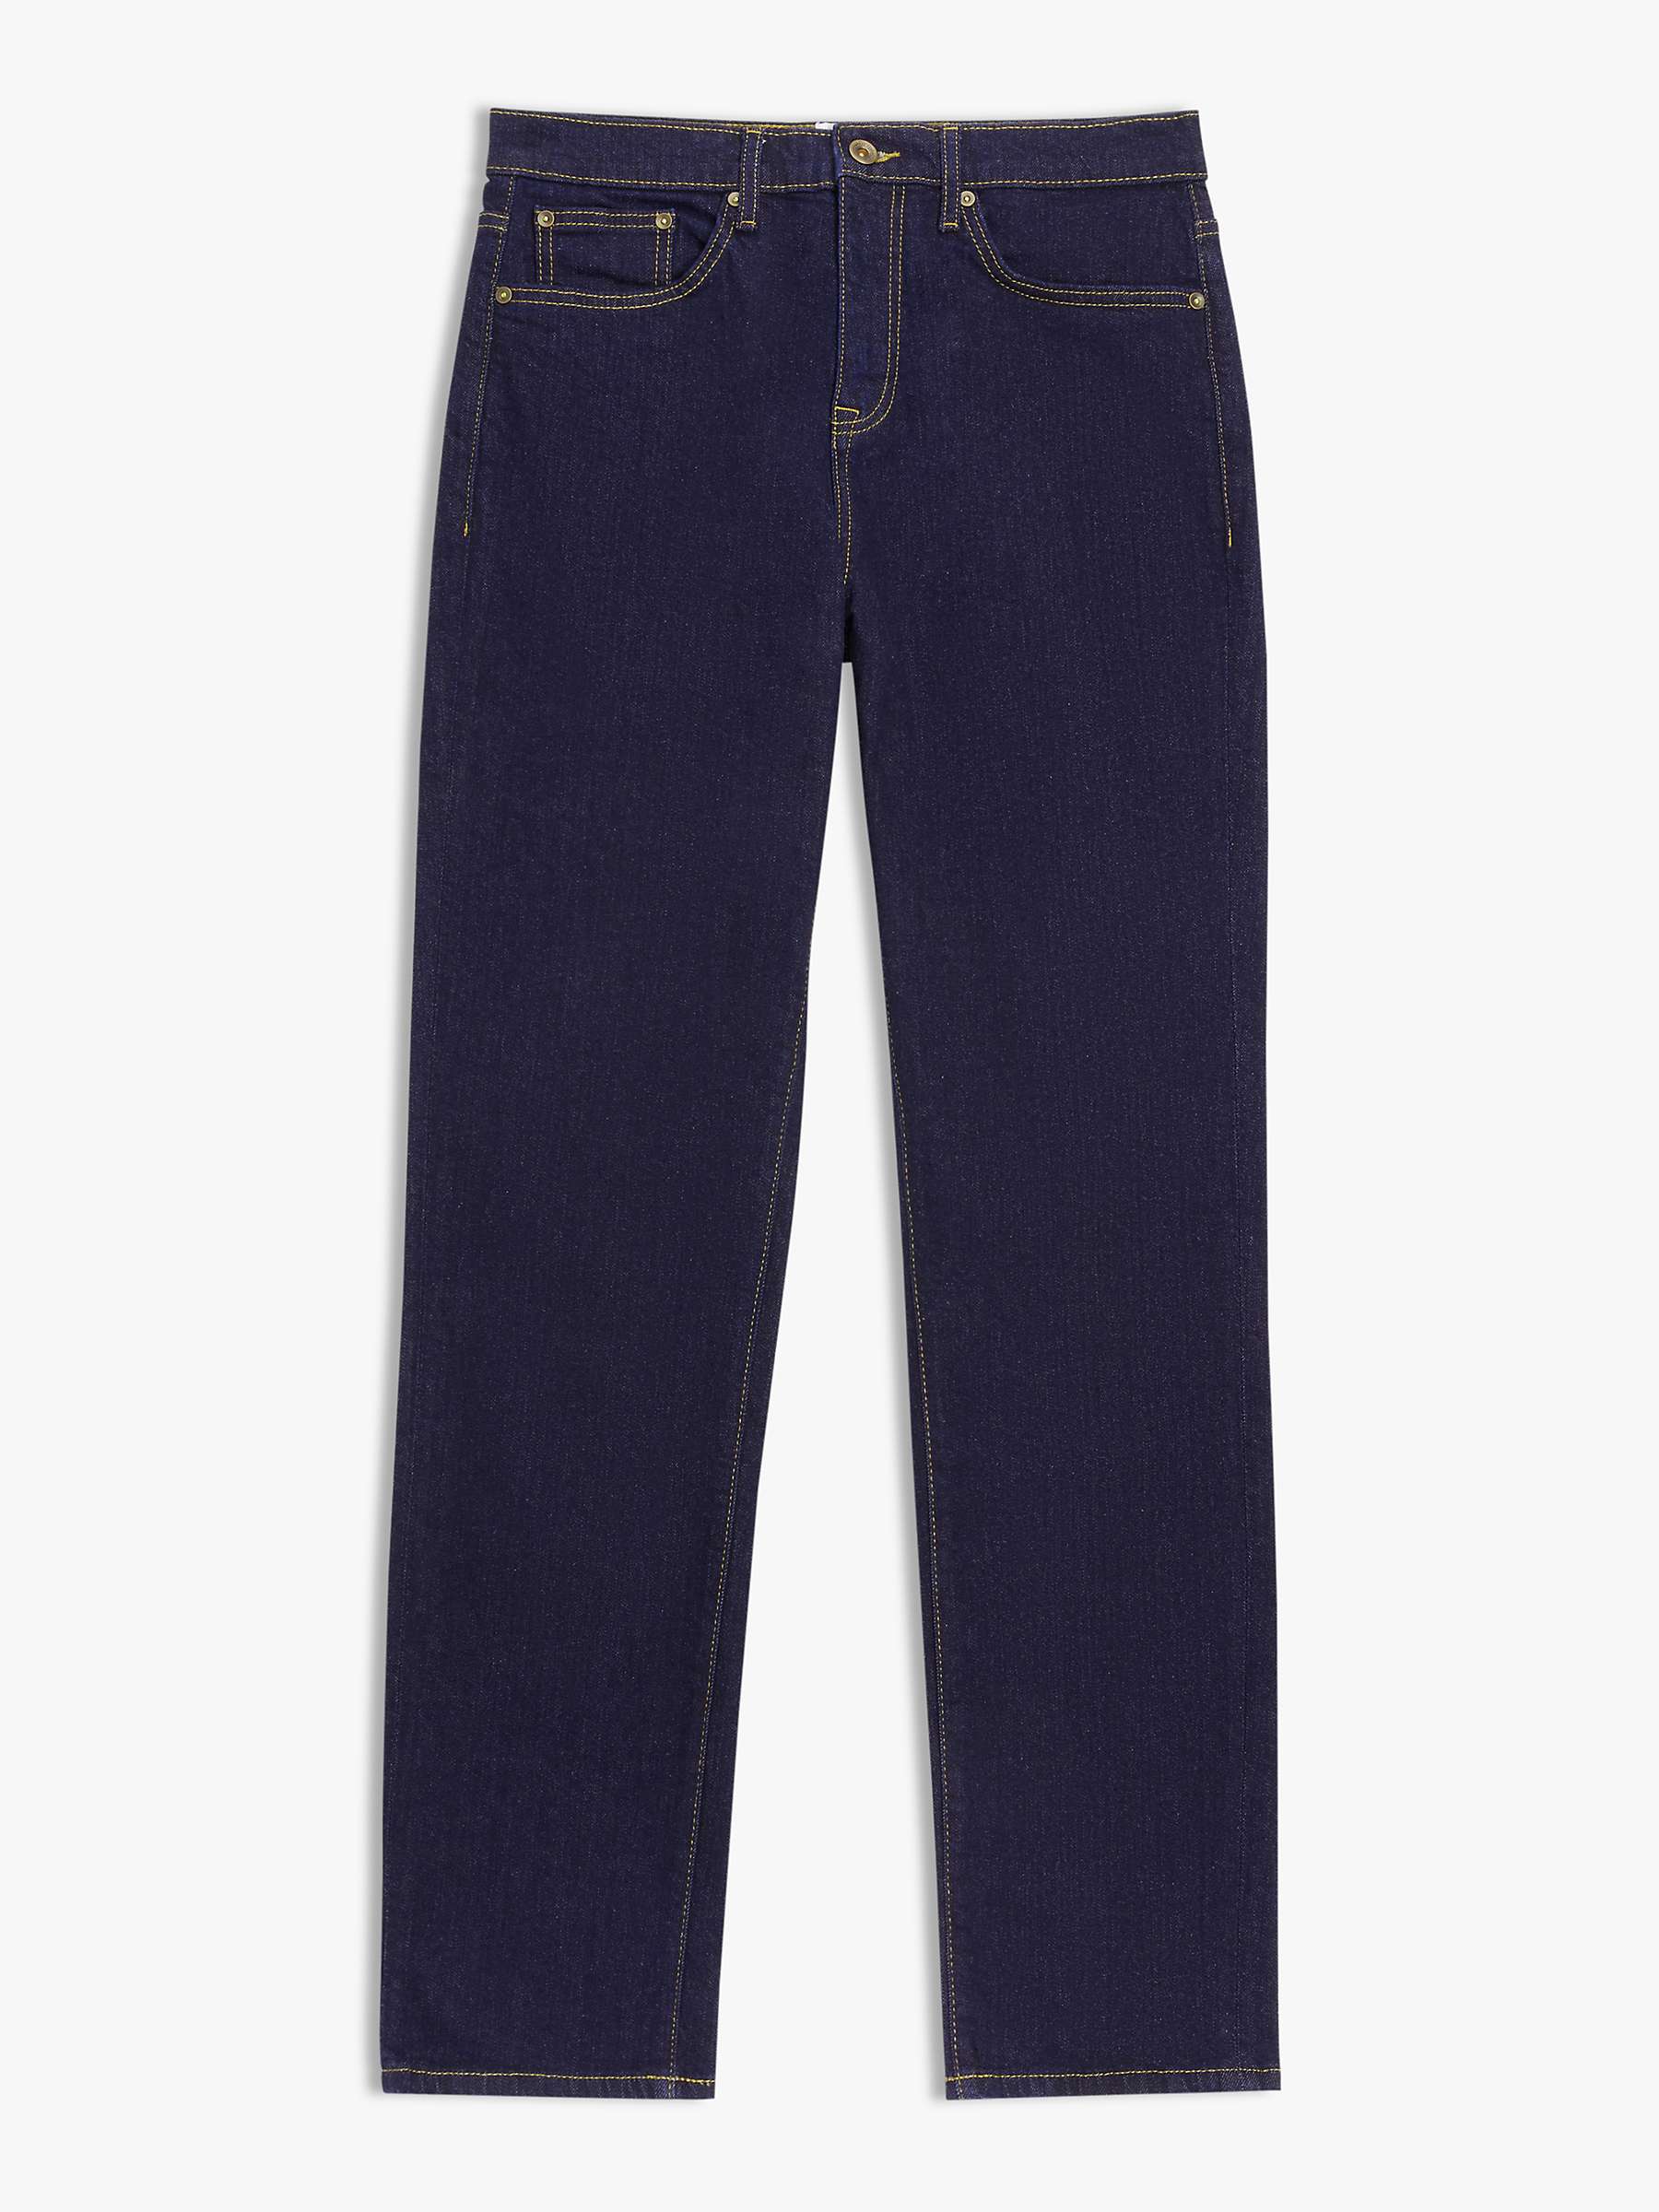 Buy John Lewis Slim Fit Denim Jeans, Blue Online at johnlewis.com